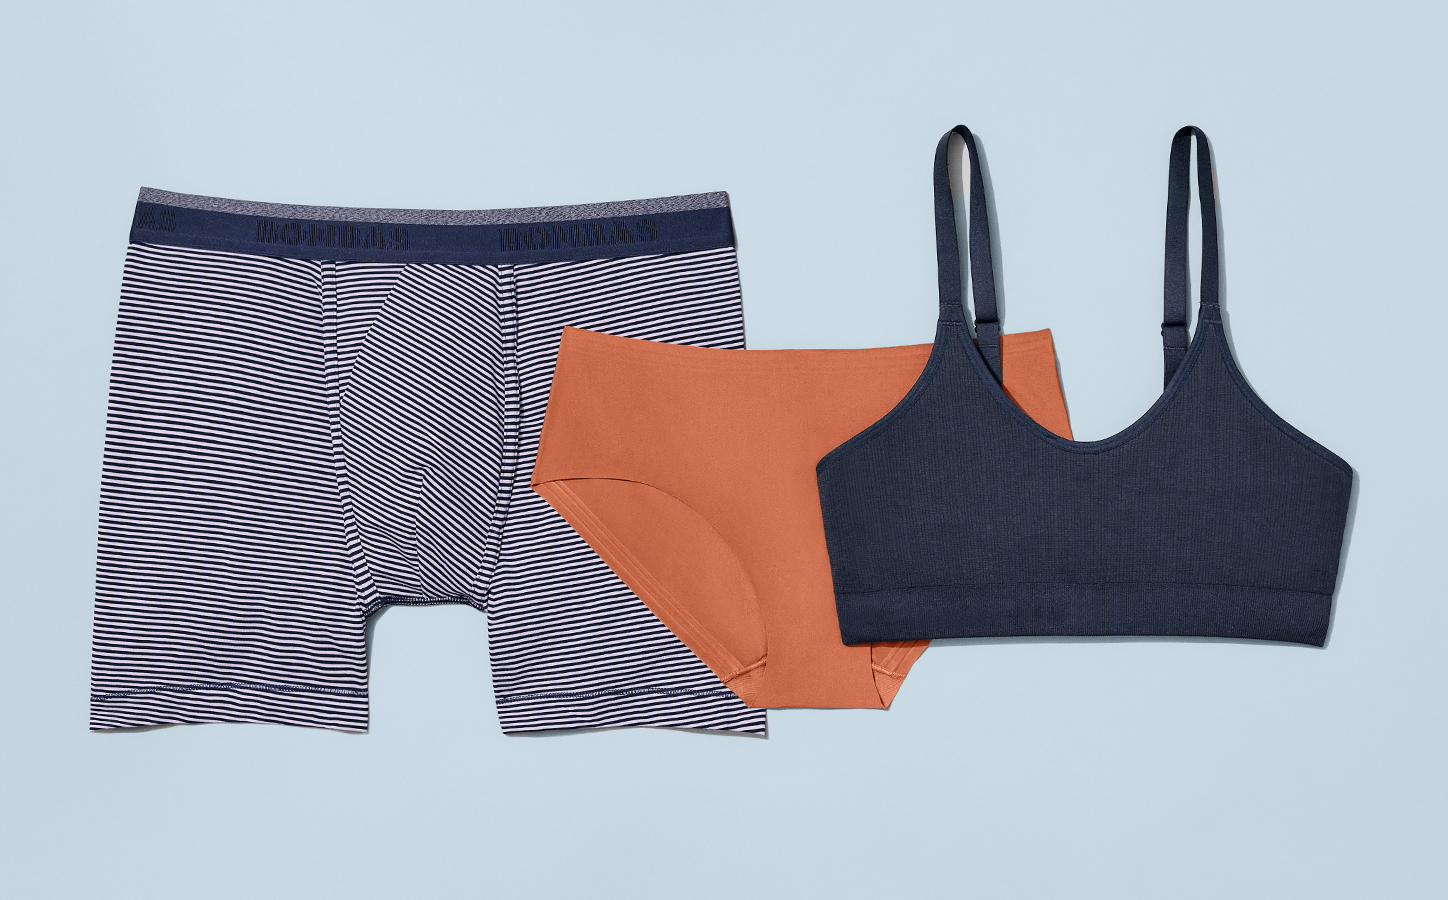 Bombas. Socks, Underwear, T-Shirts, Slippers designed for comfort